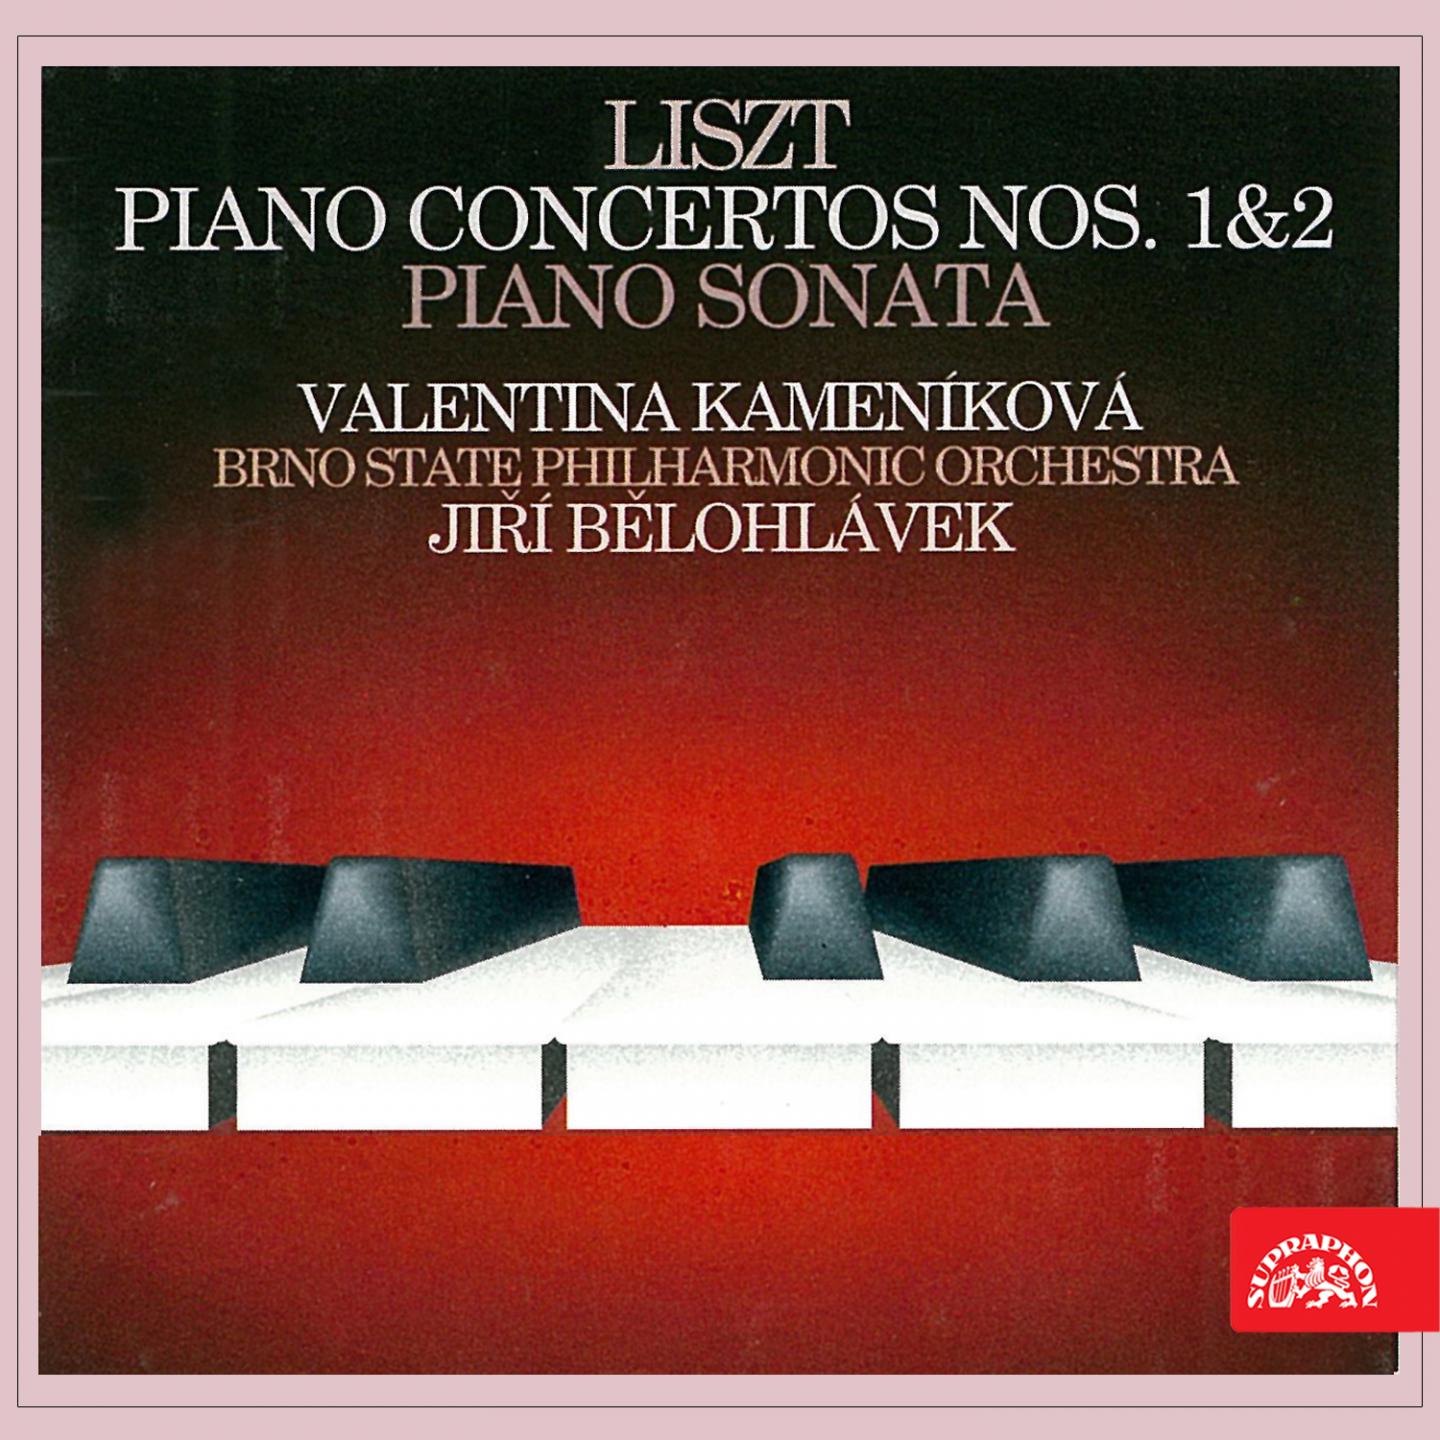 Liszt: Piano Concertos Nos. 1 & 2, Piano Sonata